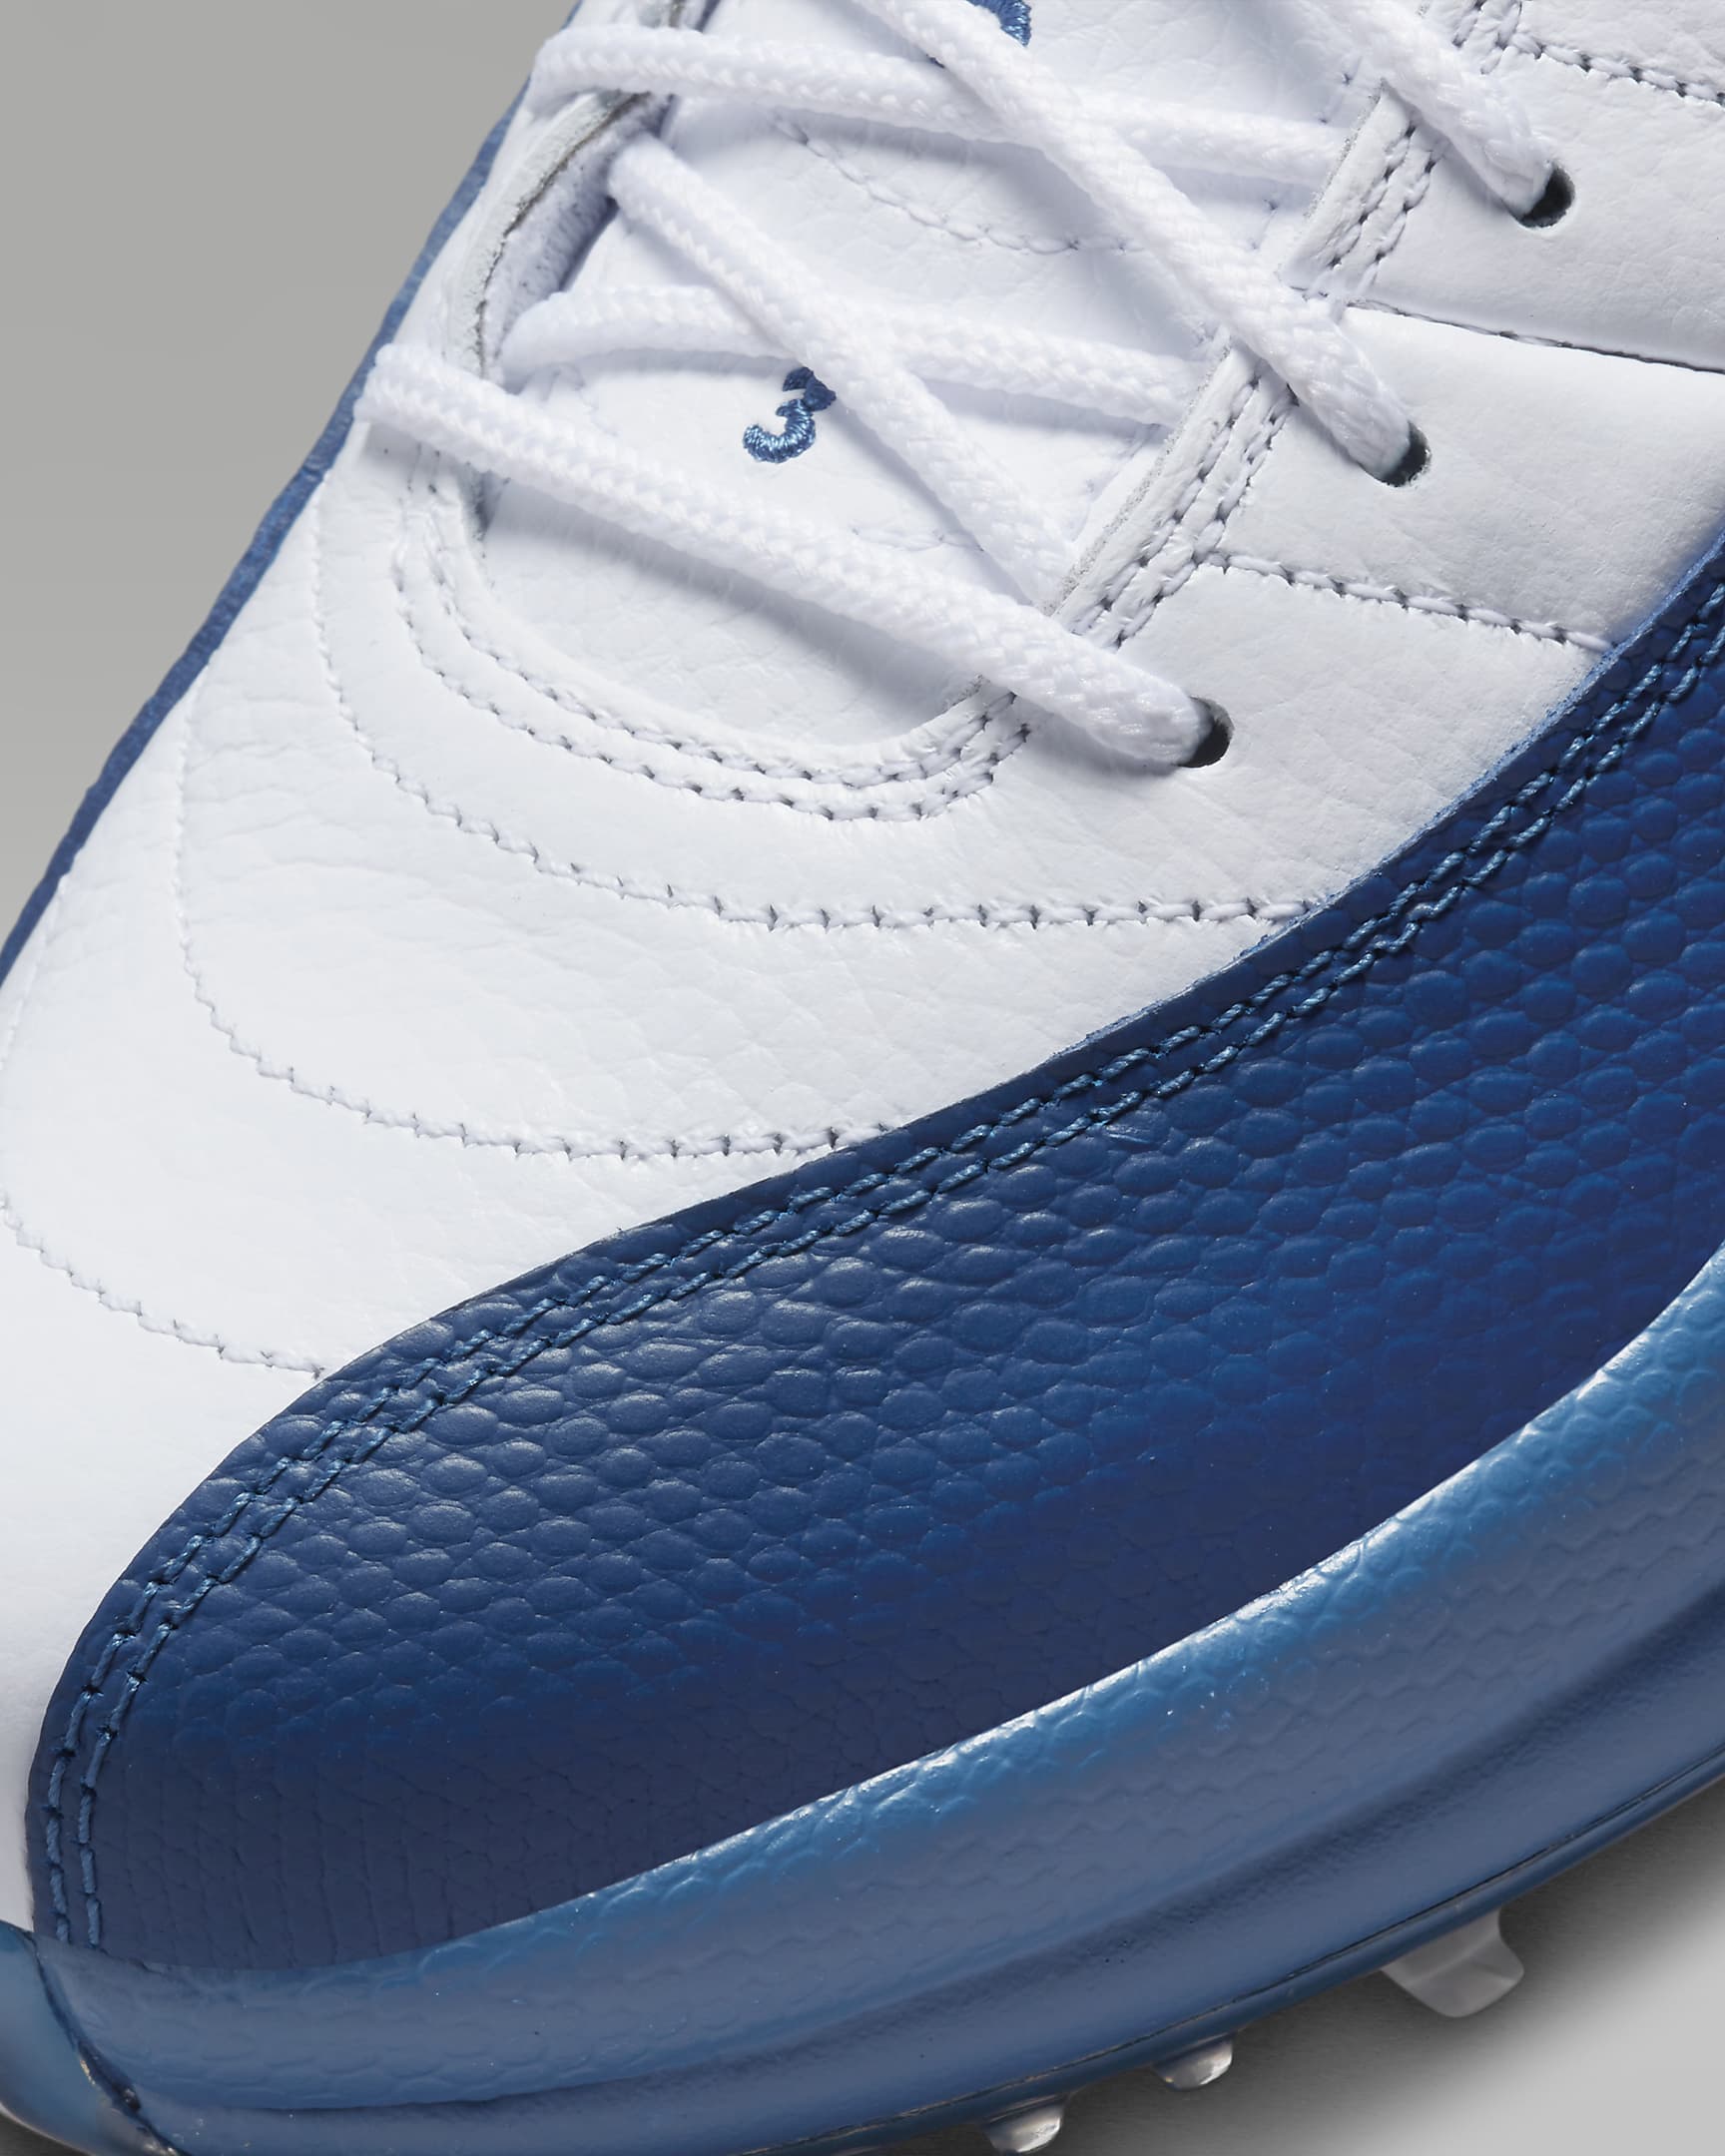 Air Jordan 12 Low Golf Shoes - White/Metallic Silver/Varsity Red/French Blue